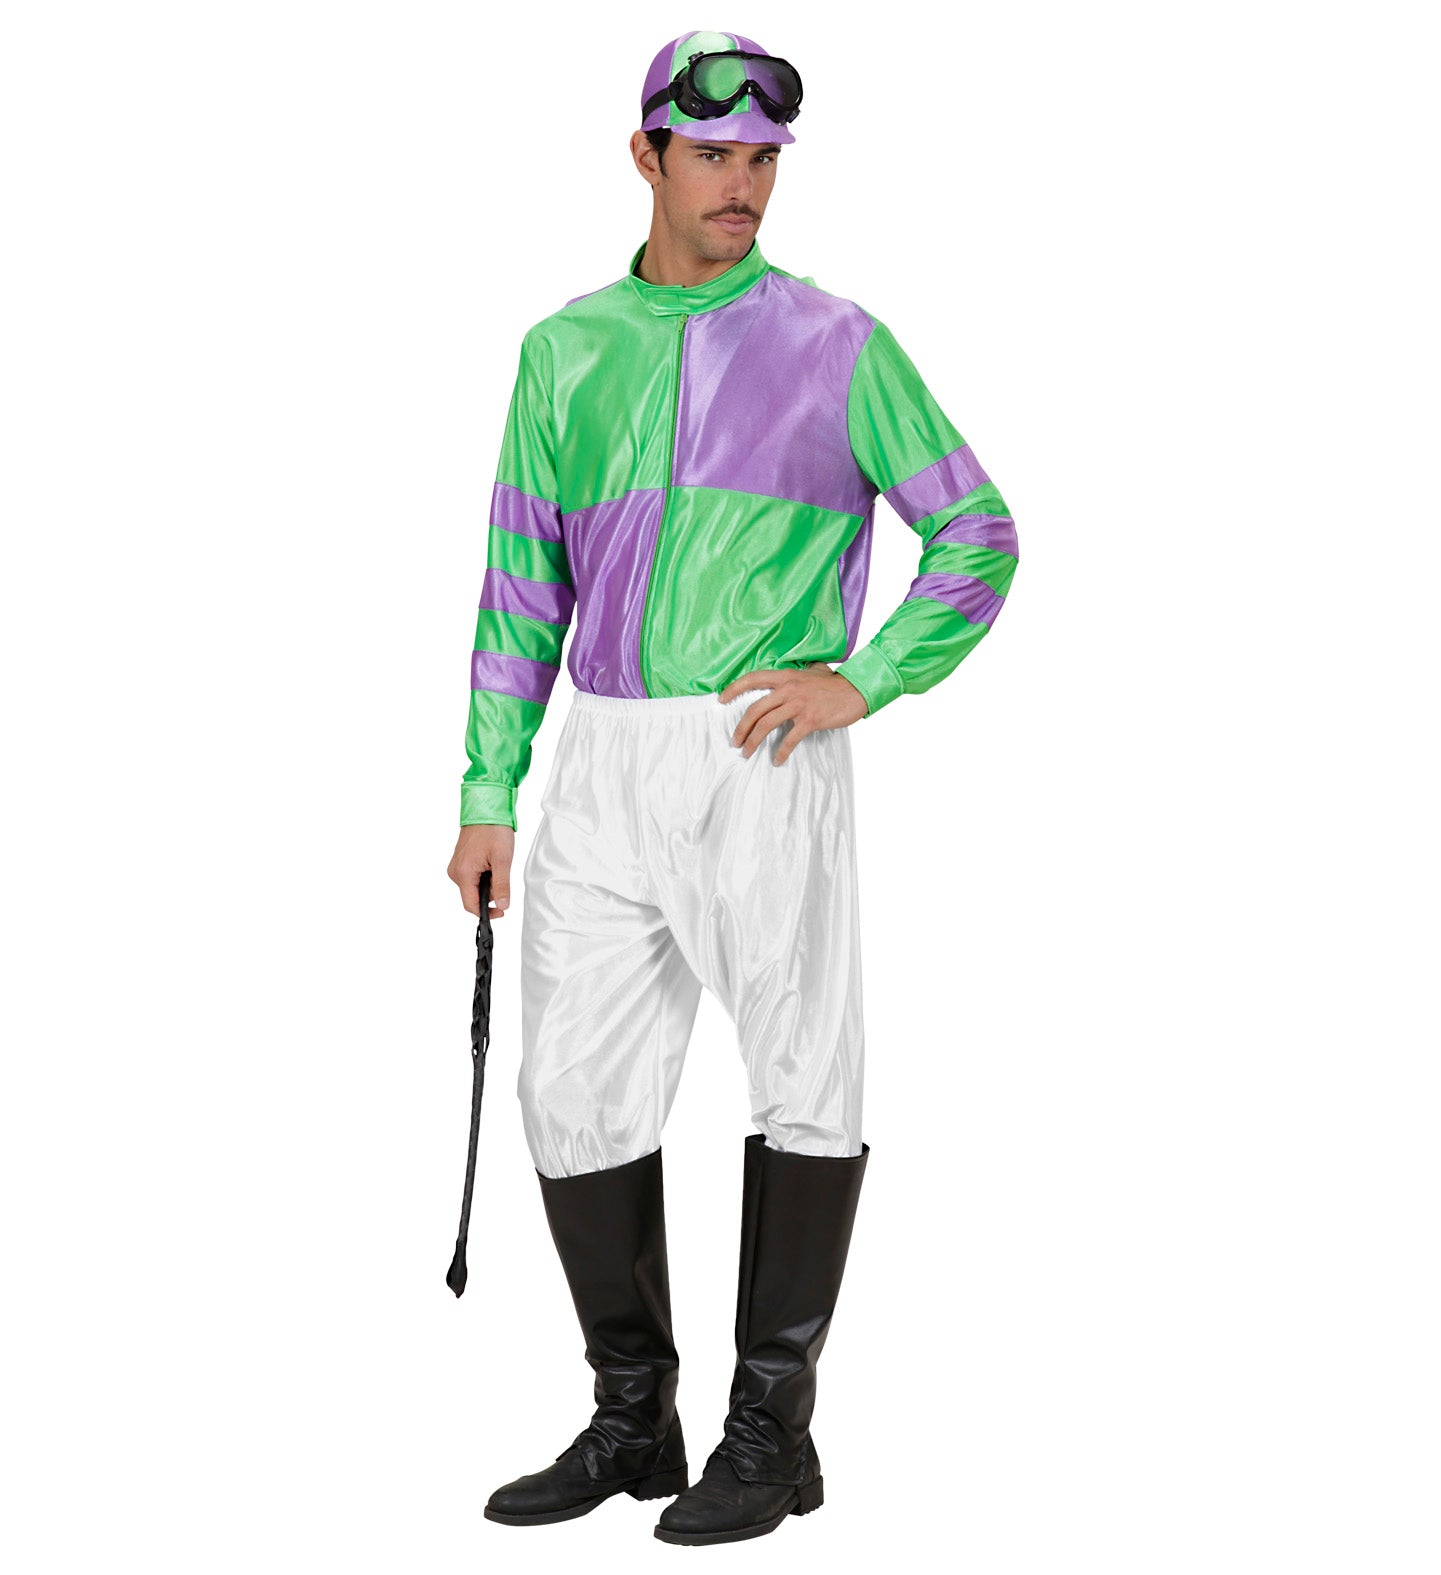 Jockey Costume Green and Purple